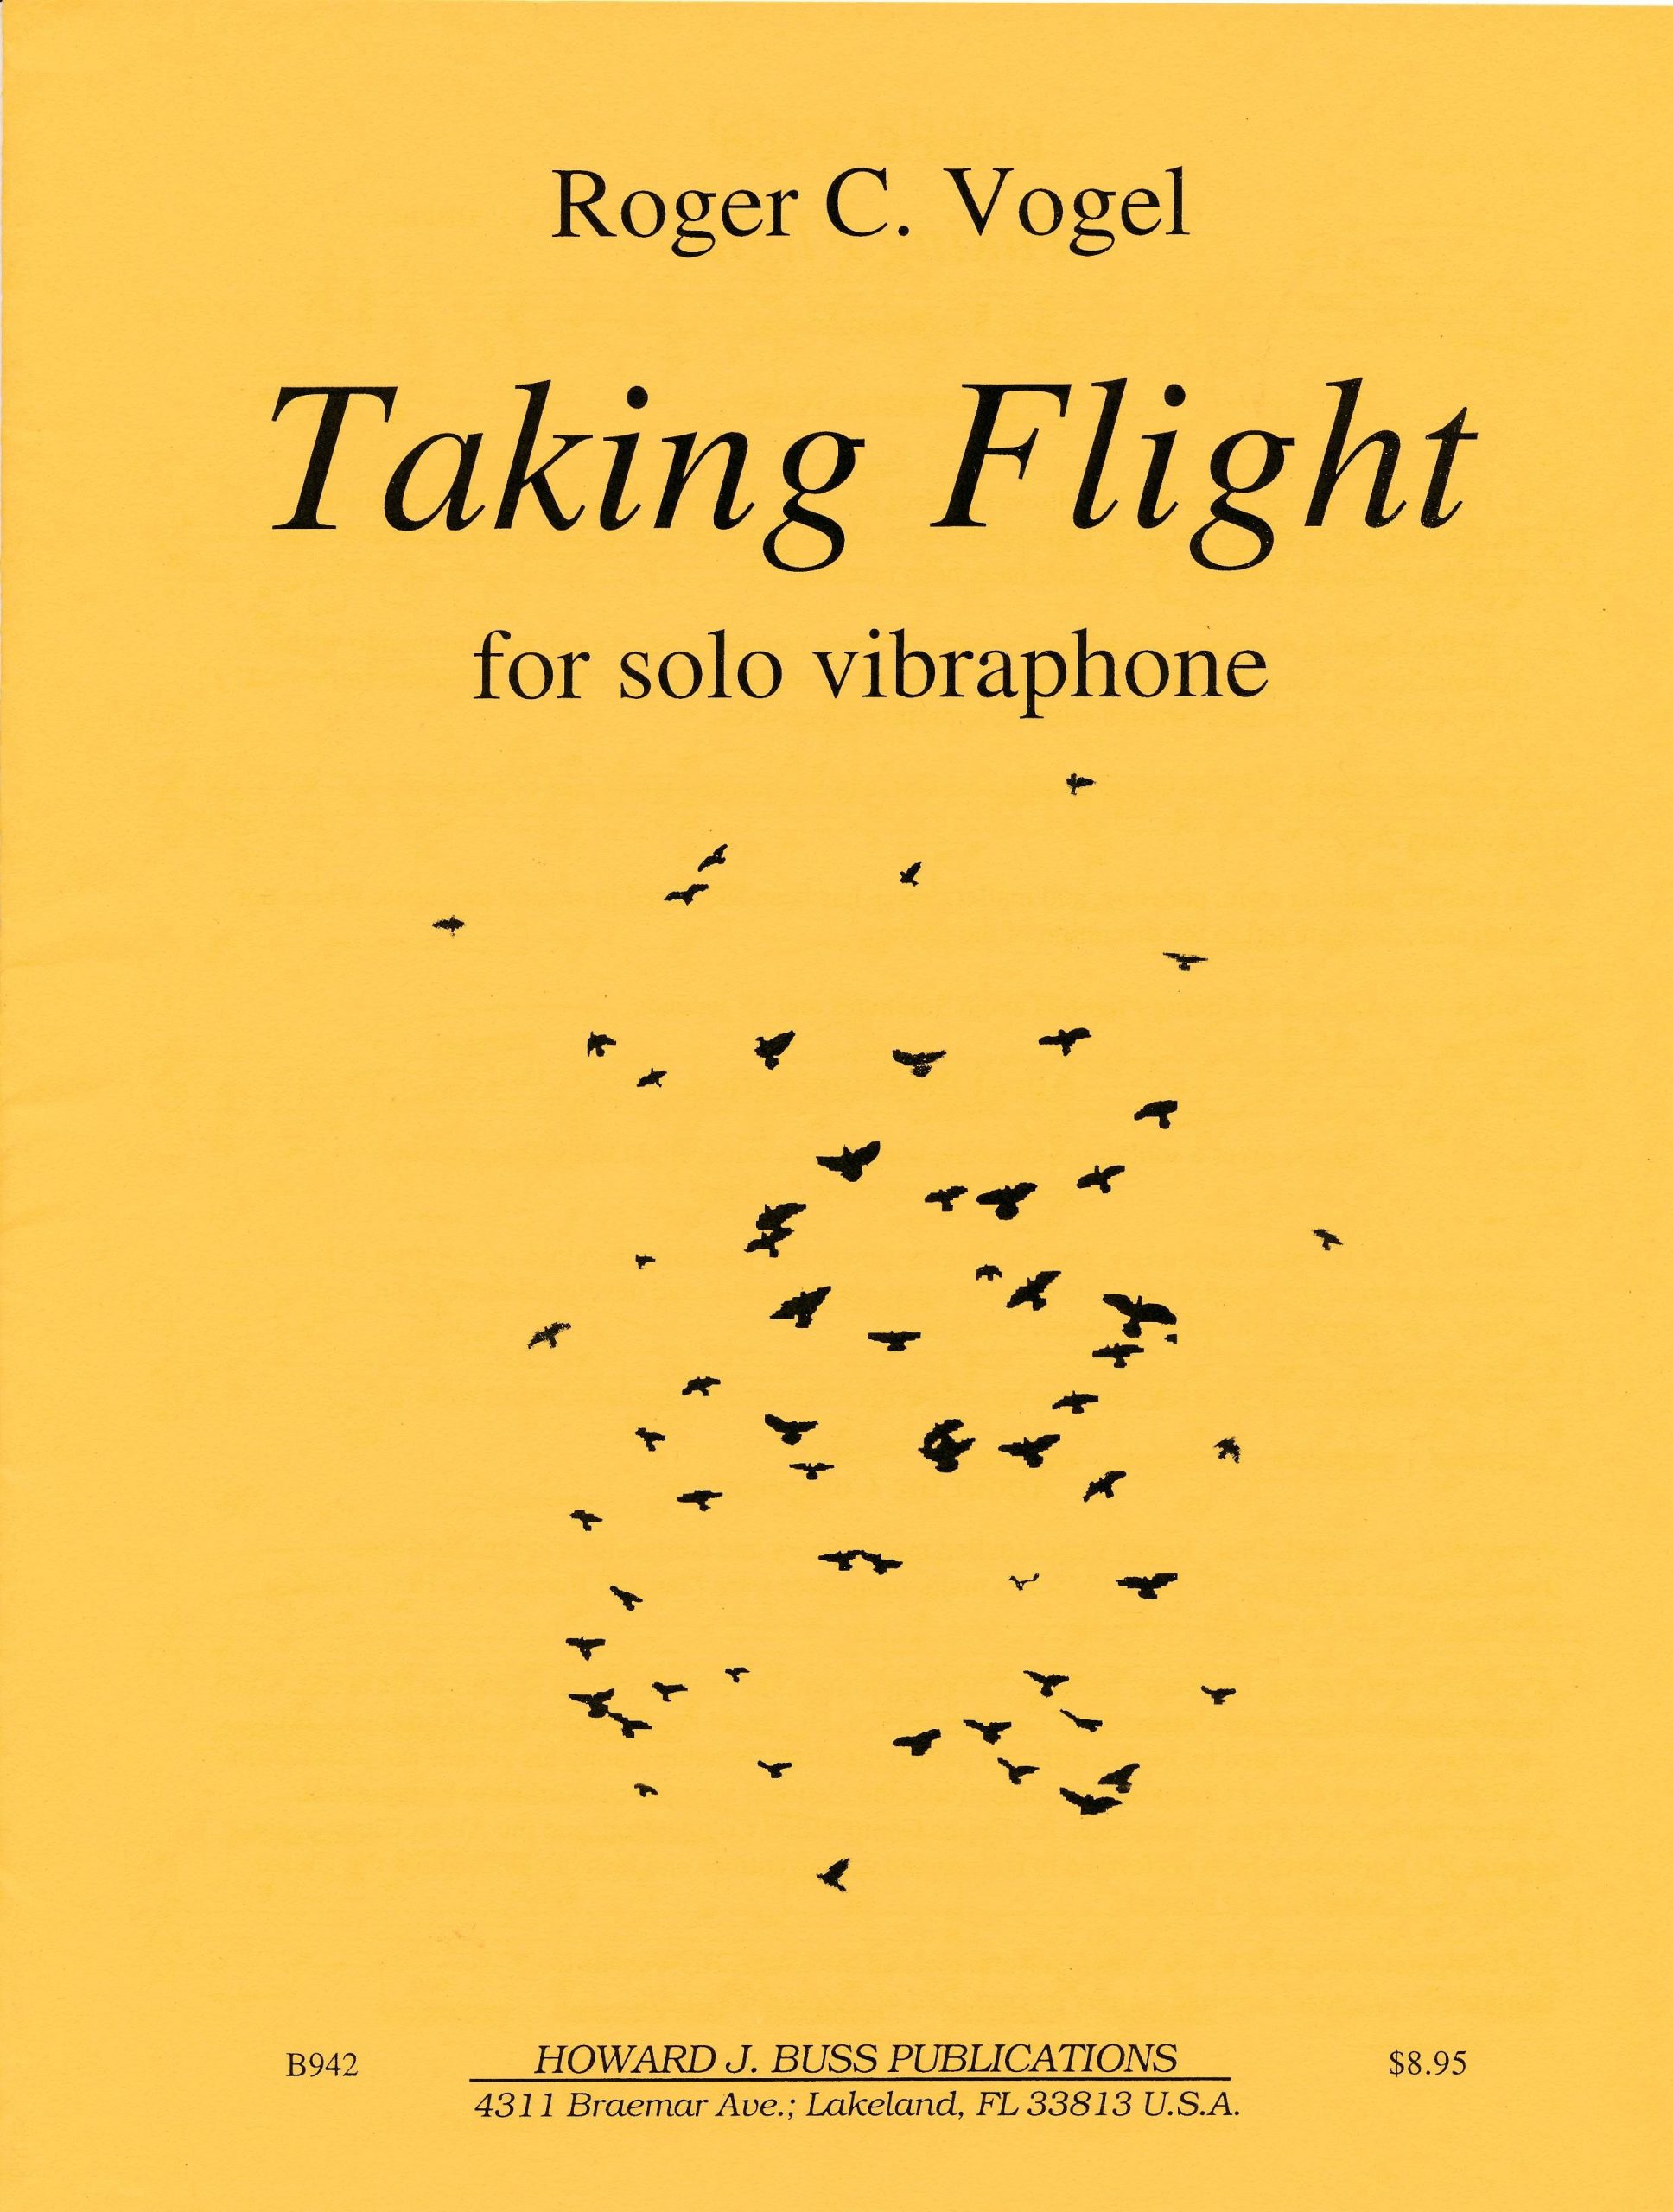 Taking Flight by Roger C. Vogel